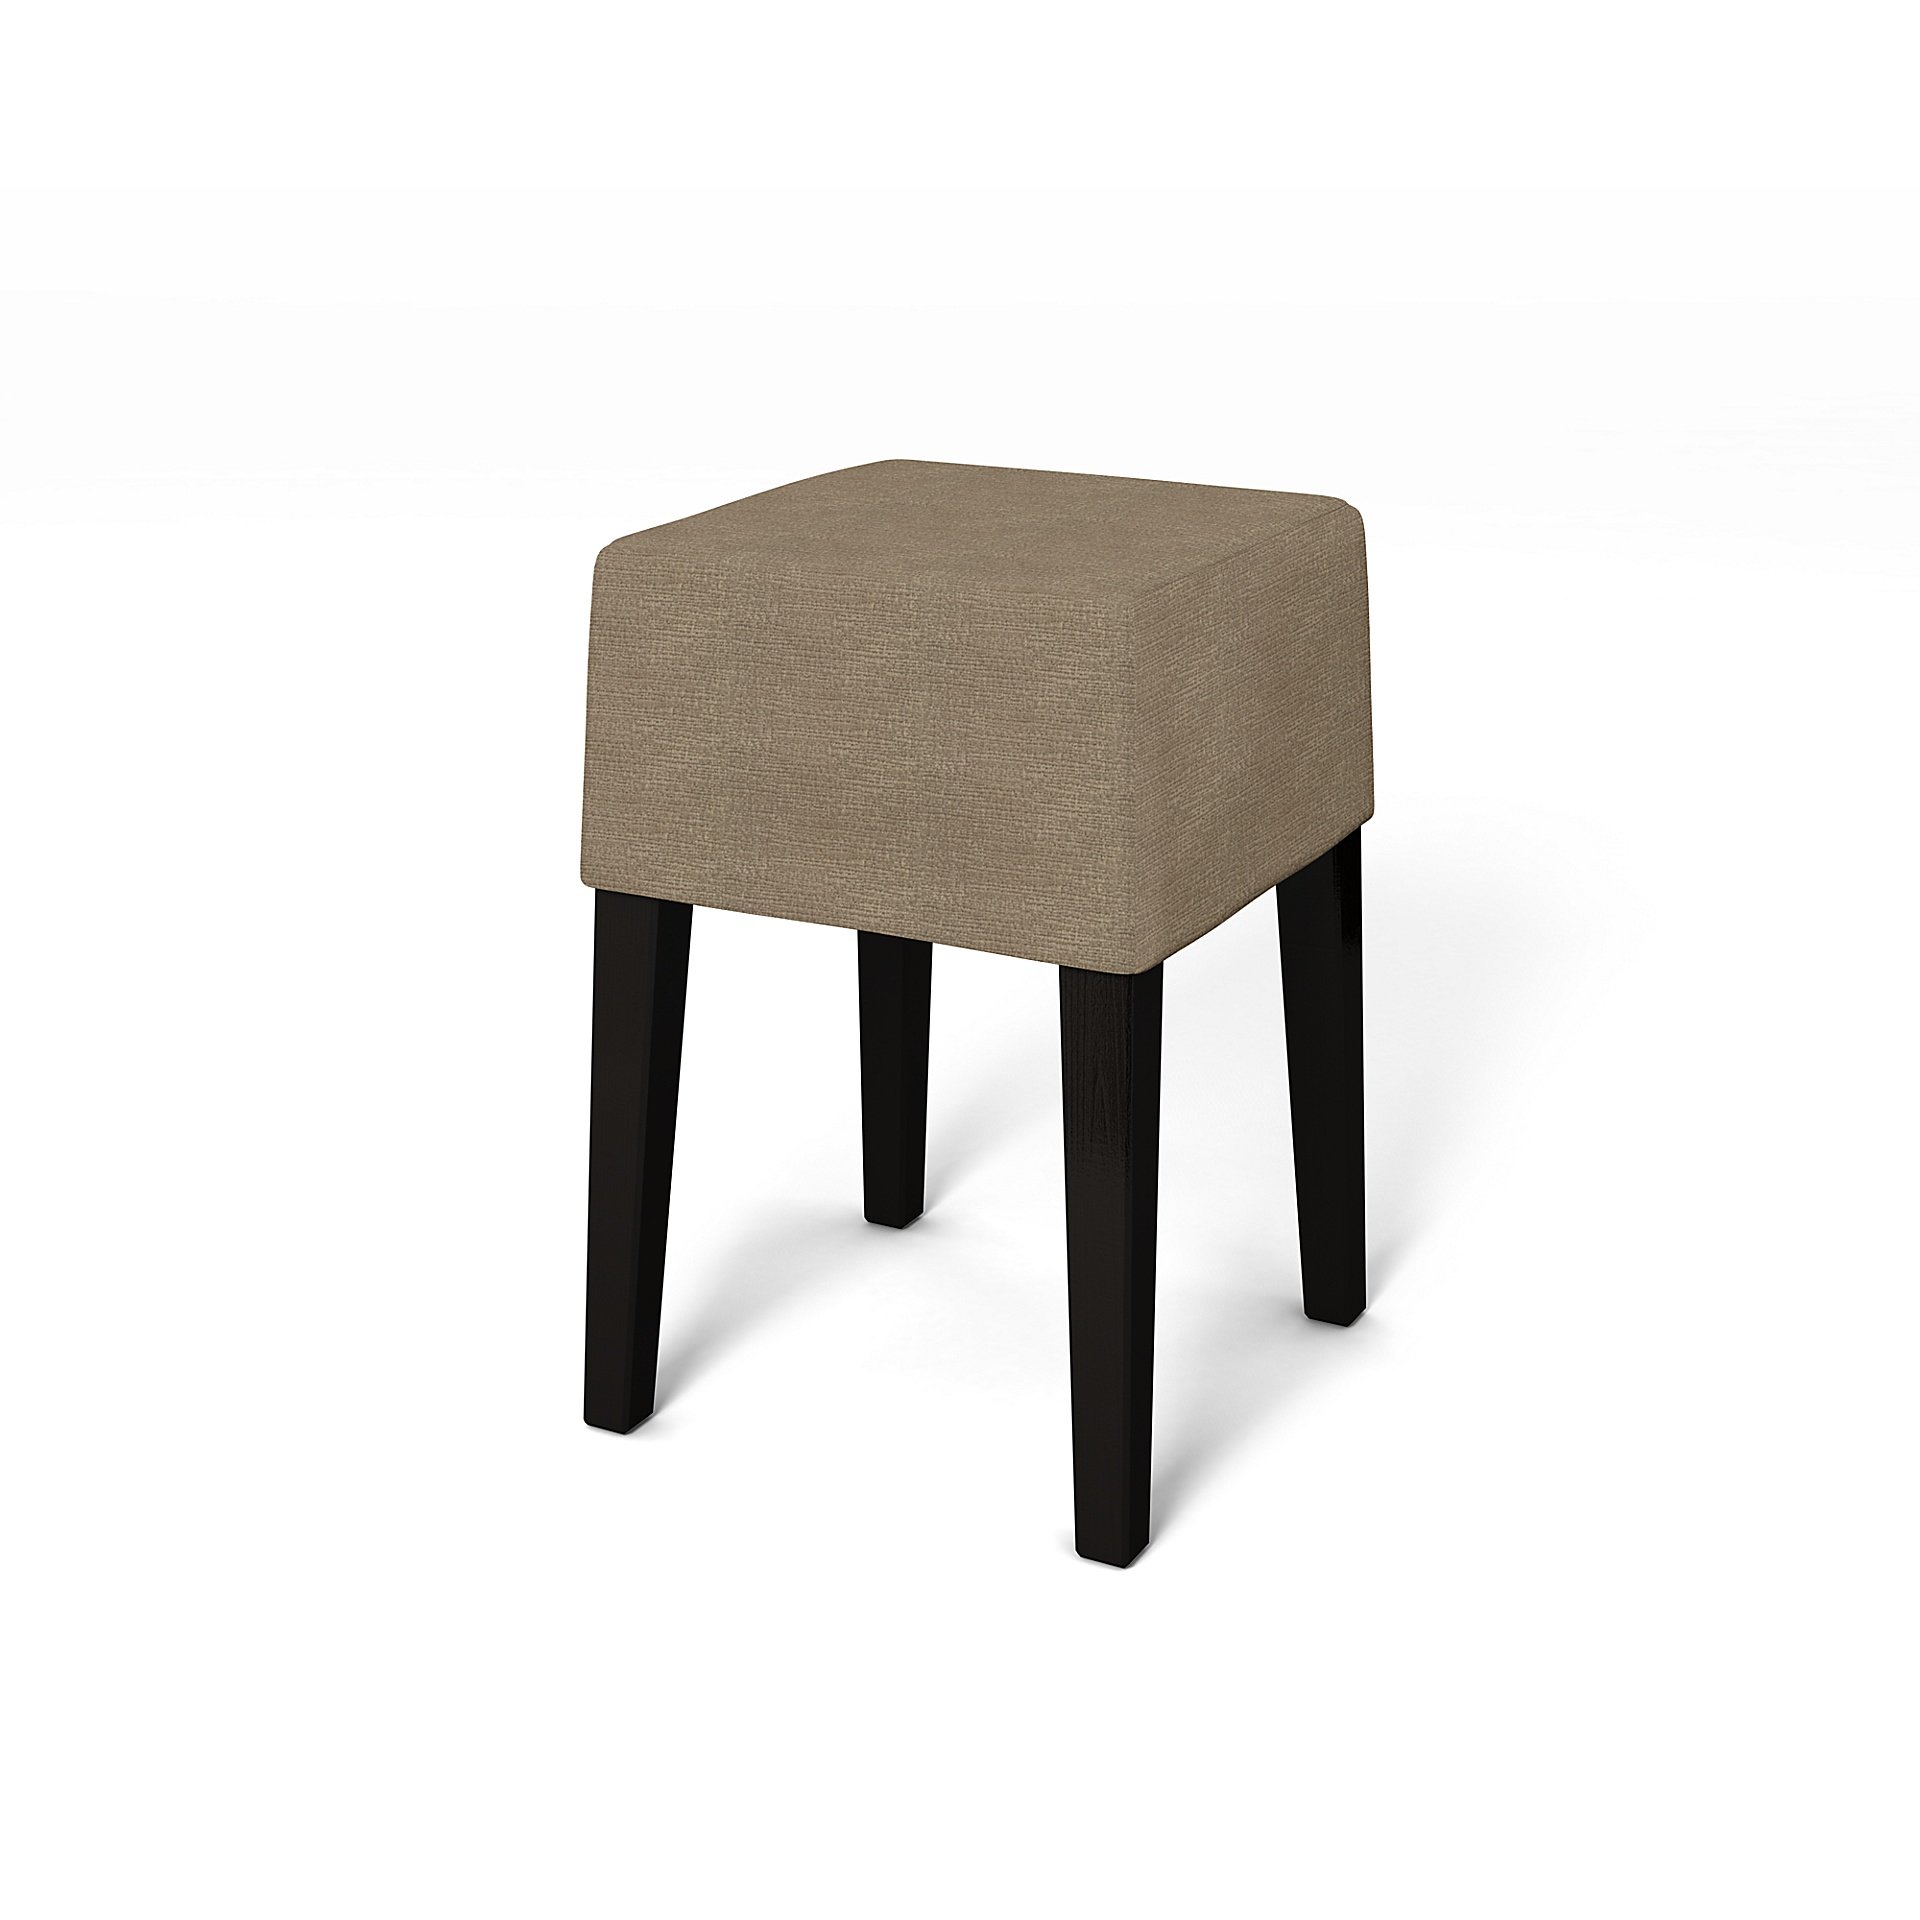 IKEA - Nils Stool Cover, Camel, Boucle & Texture - Bemz